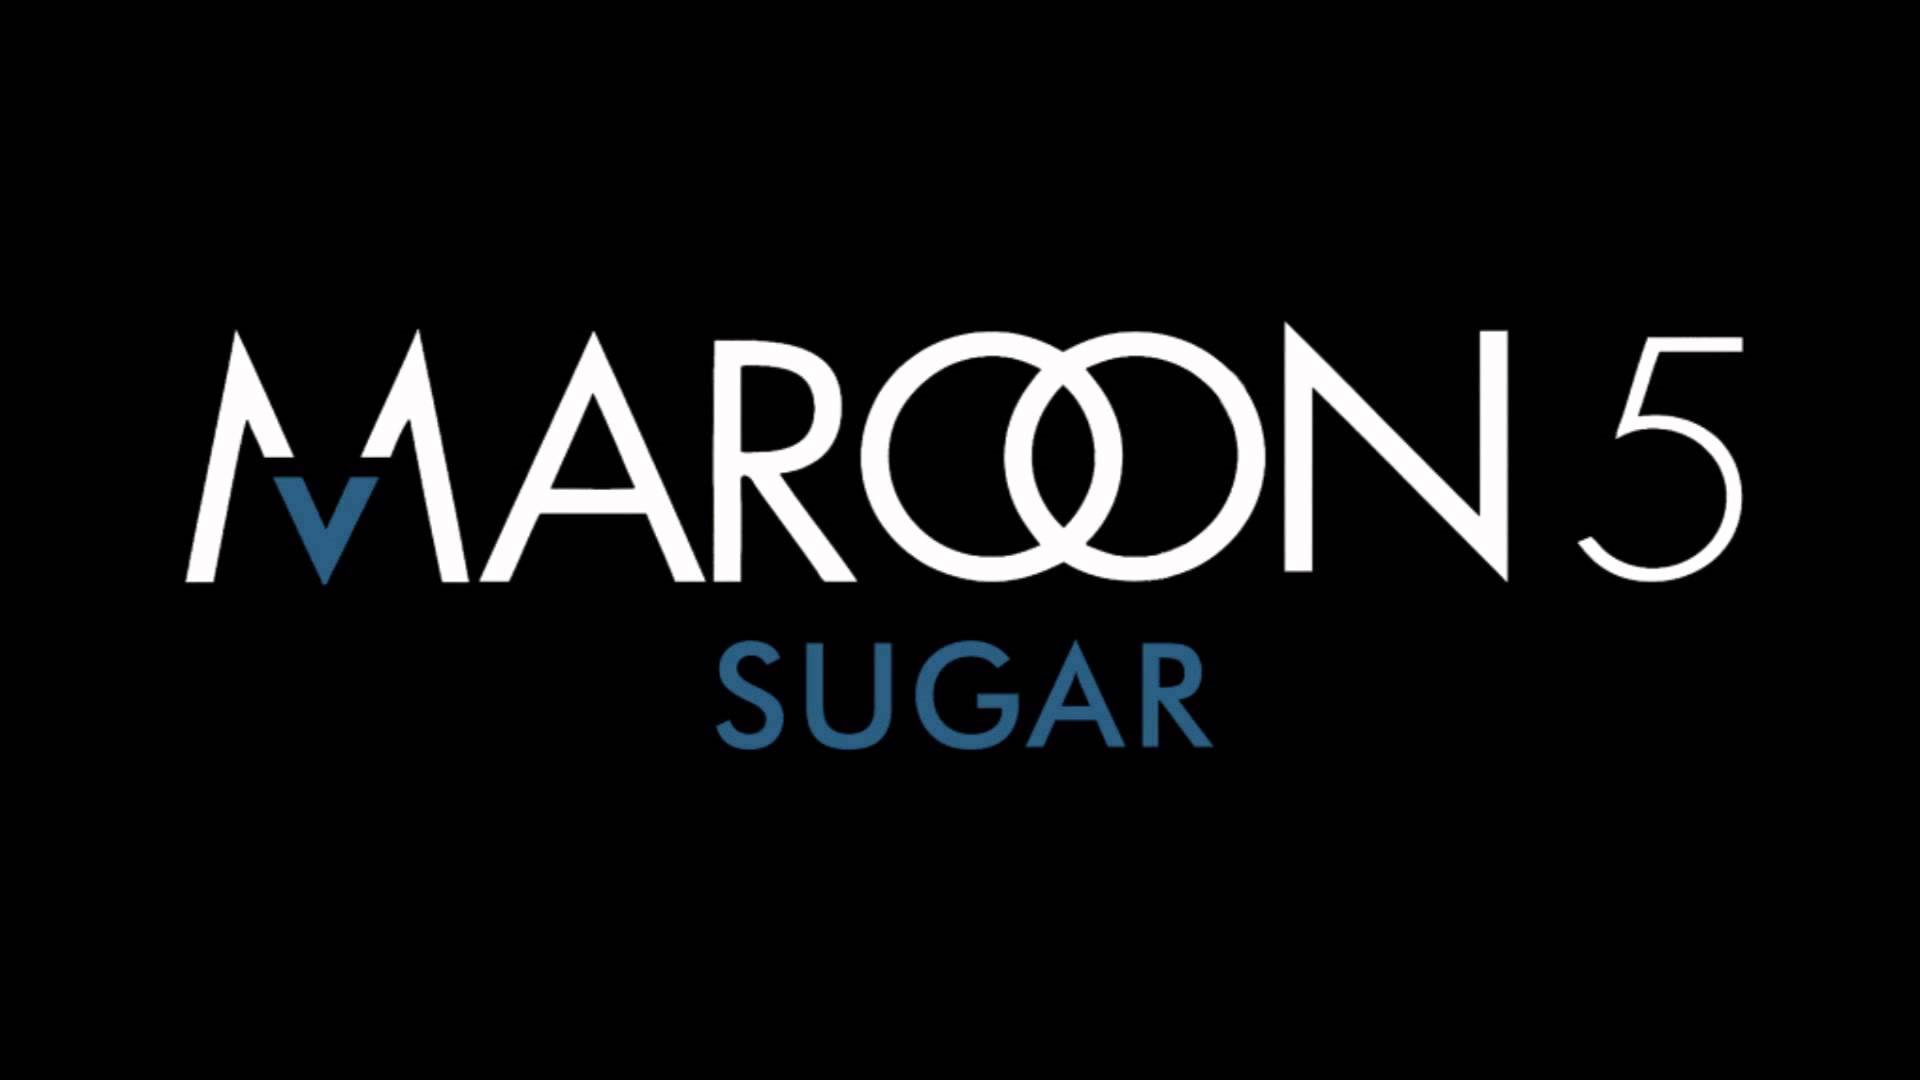 › Maroon 5 Wallpaper for desktop and mobile